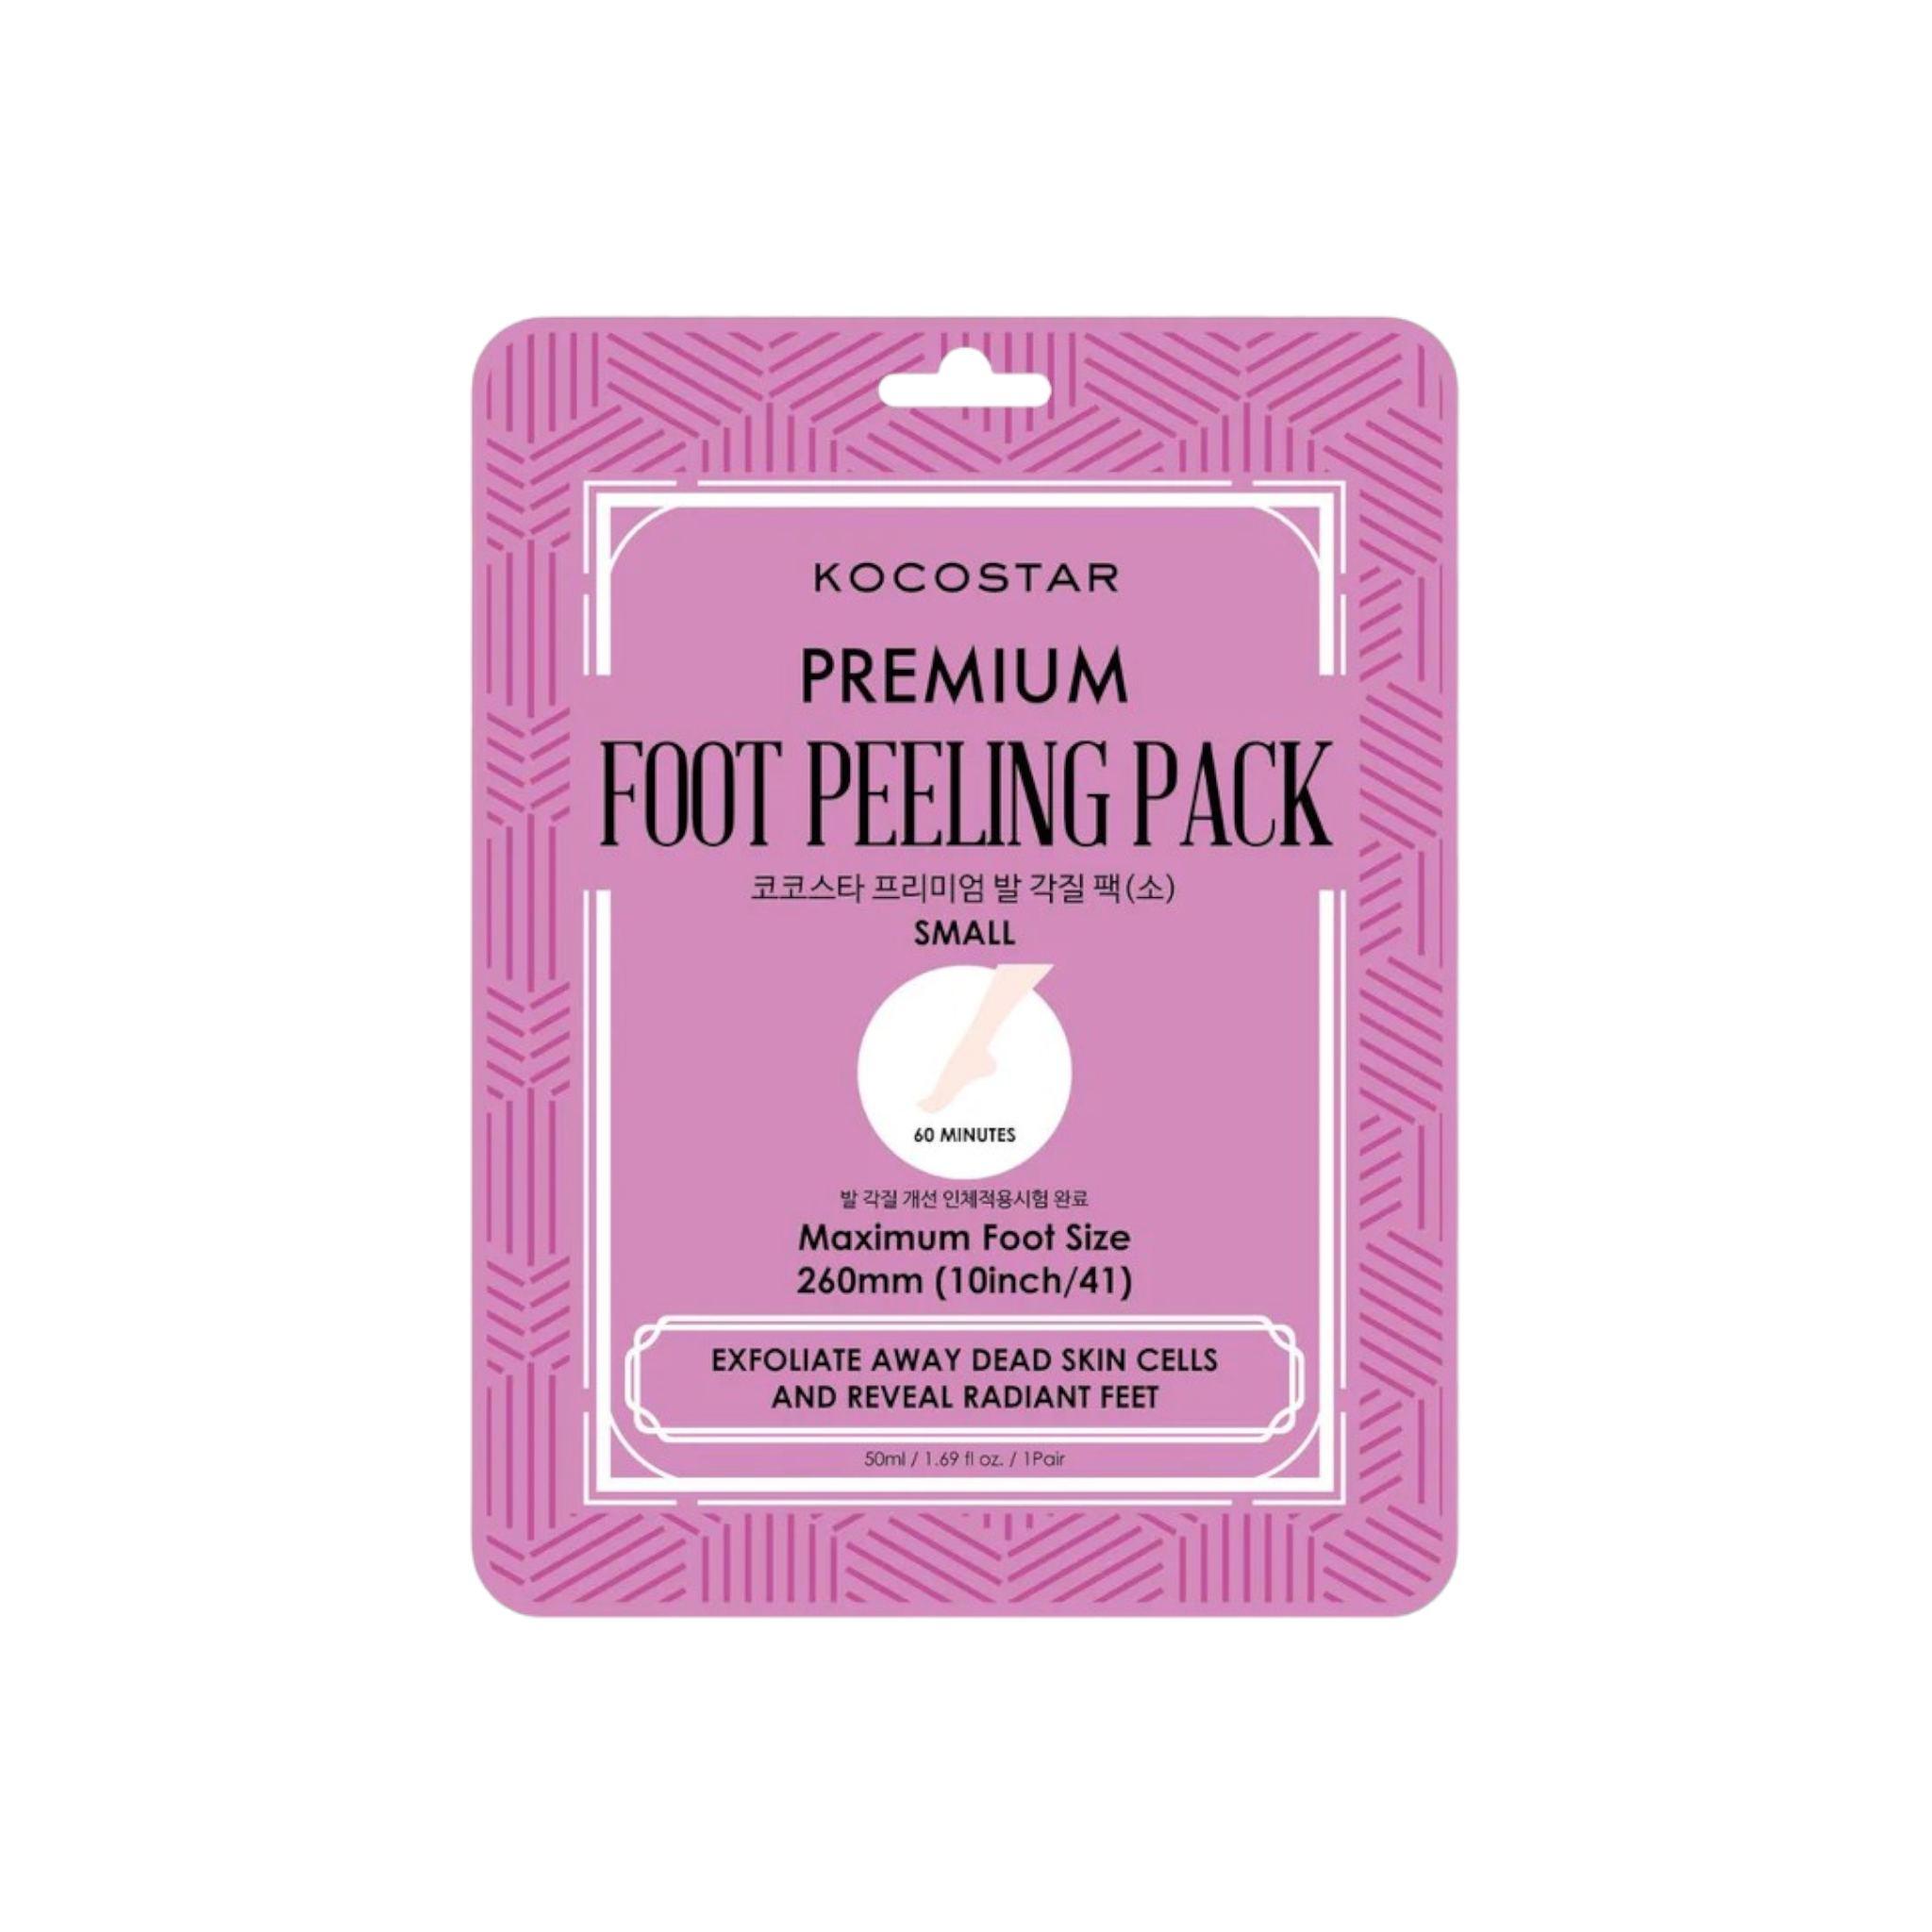 KocoStar Premium Foot Peeling Pack Small  Size 260mm(10inch/41)  50Ml